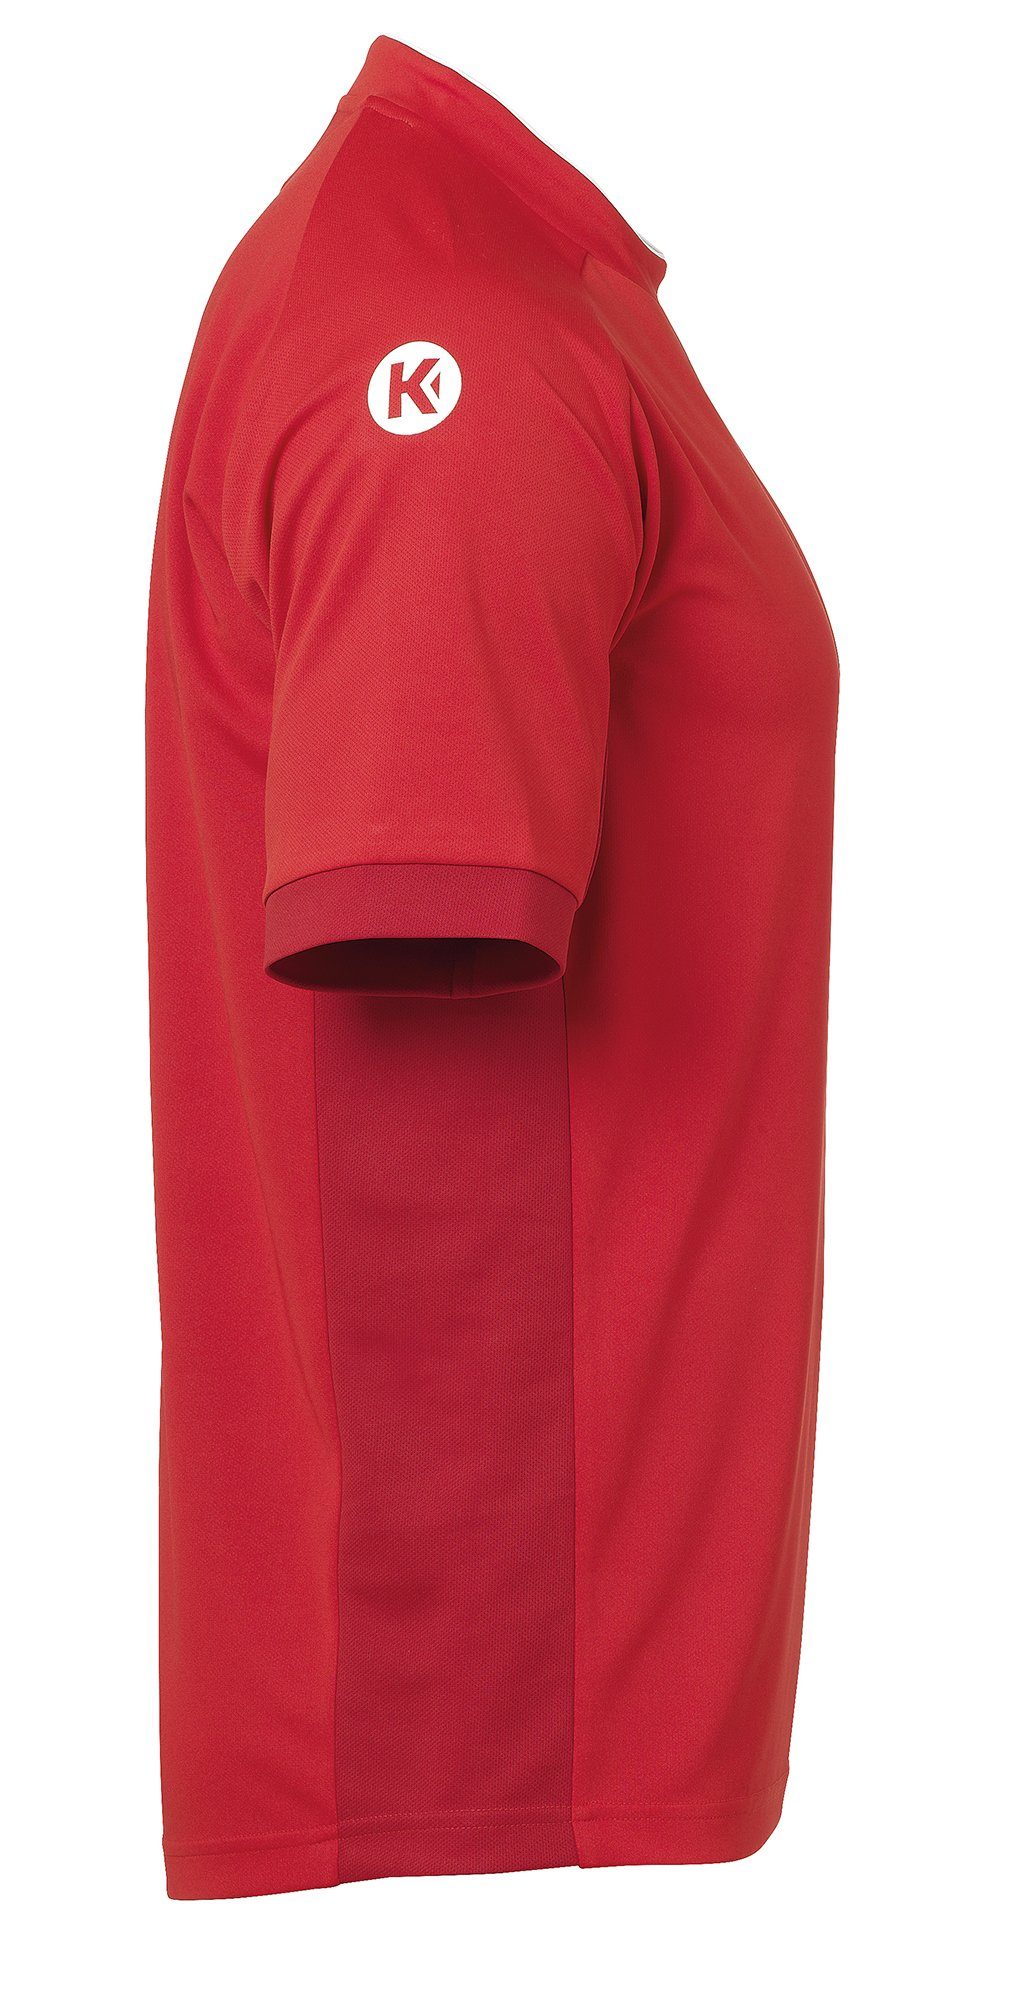 PRIME schnelltrocknend TRIKOT rot/chilirot Kempa Trainingsshirt Kempa Shirt